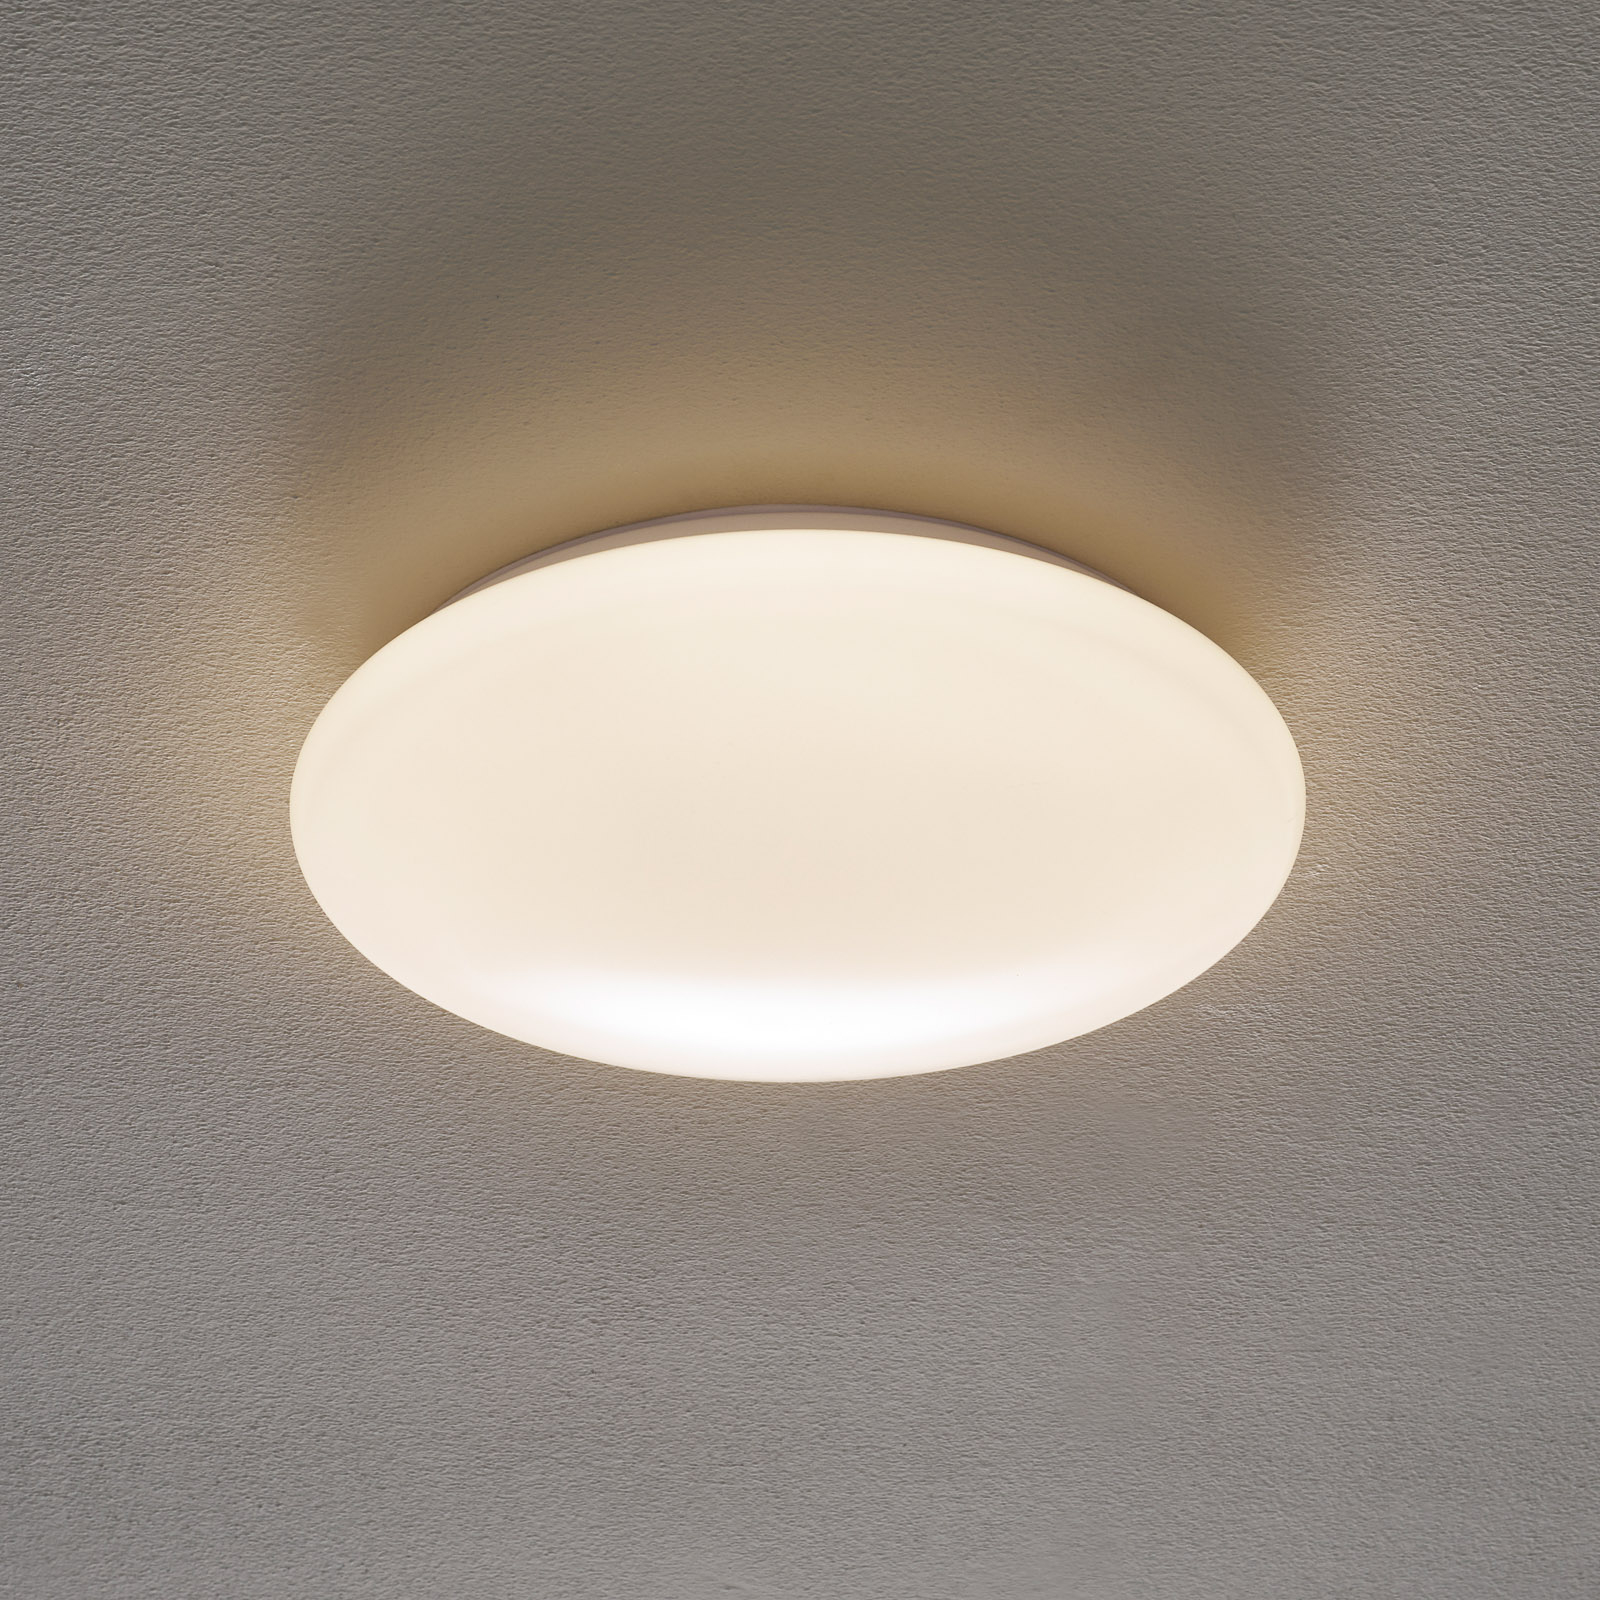 LED plafondlamp Altona, Ø 33,7 cm 1.450 lm 3.000 K